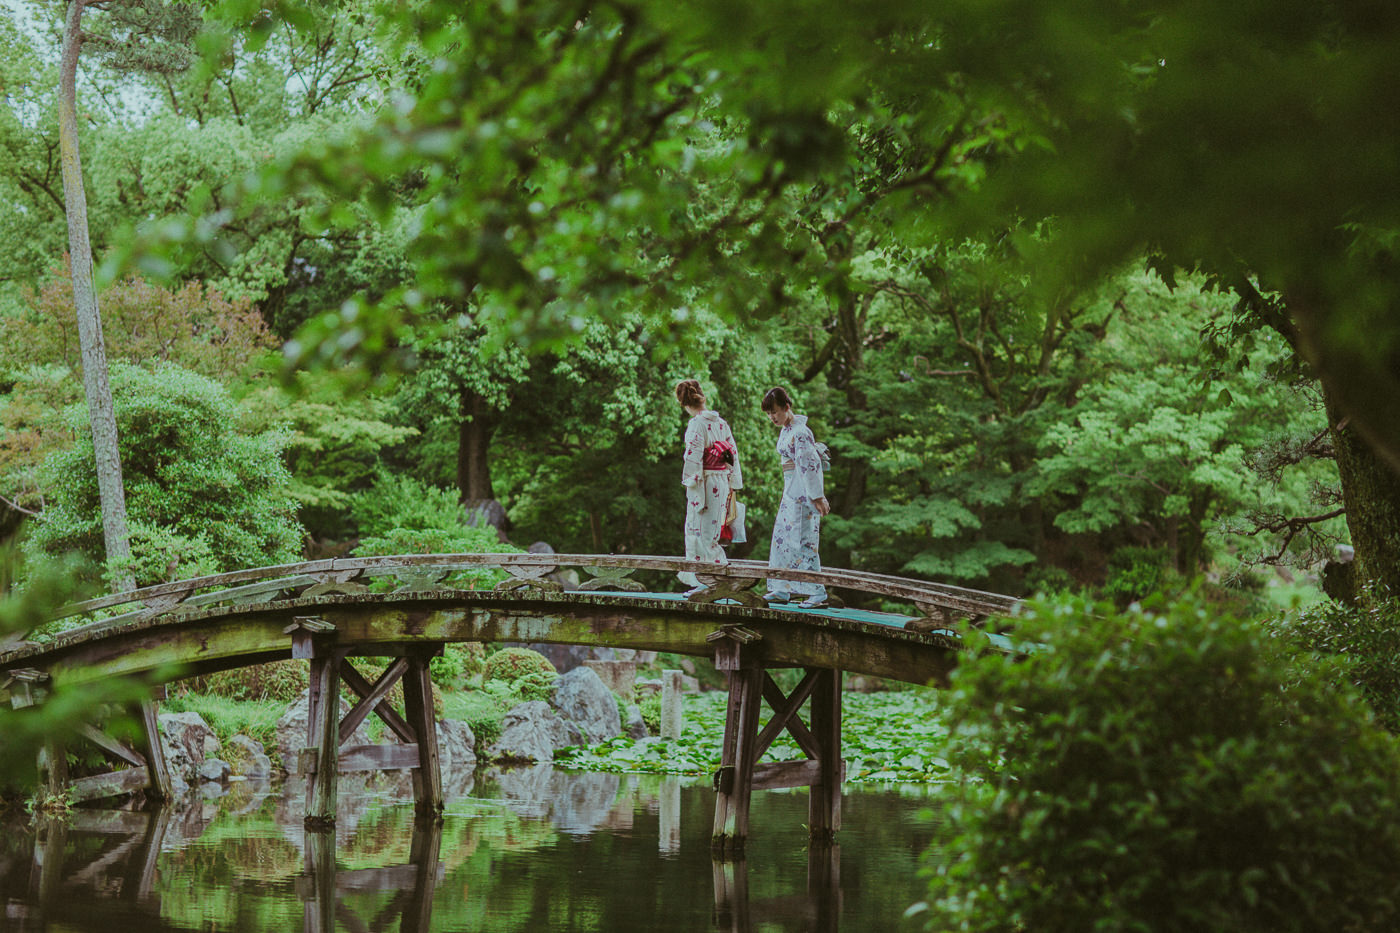 geishas in japanese garden on bridge